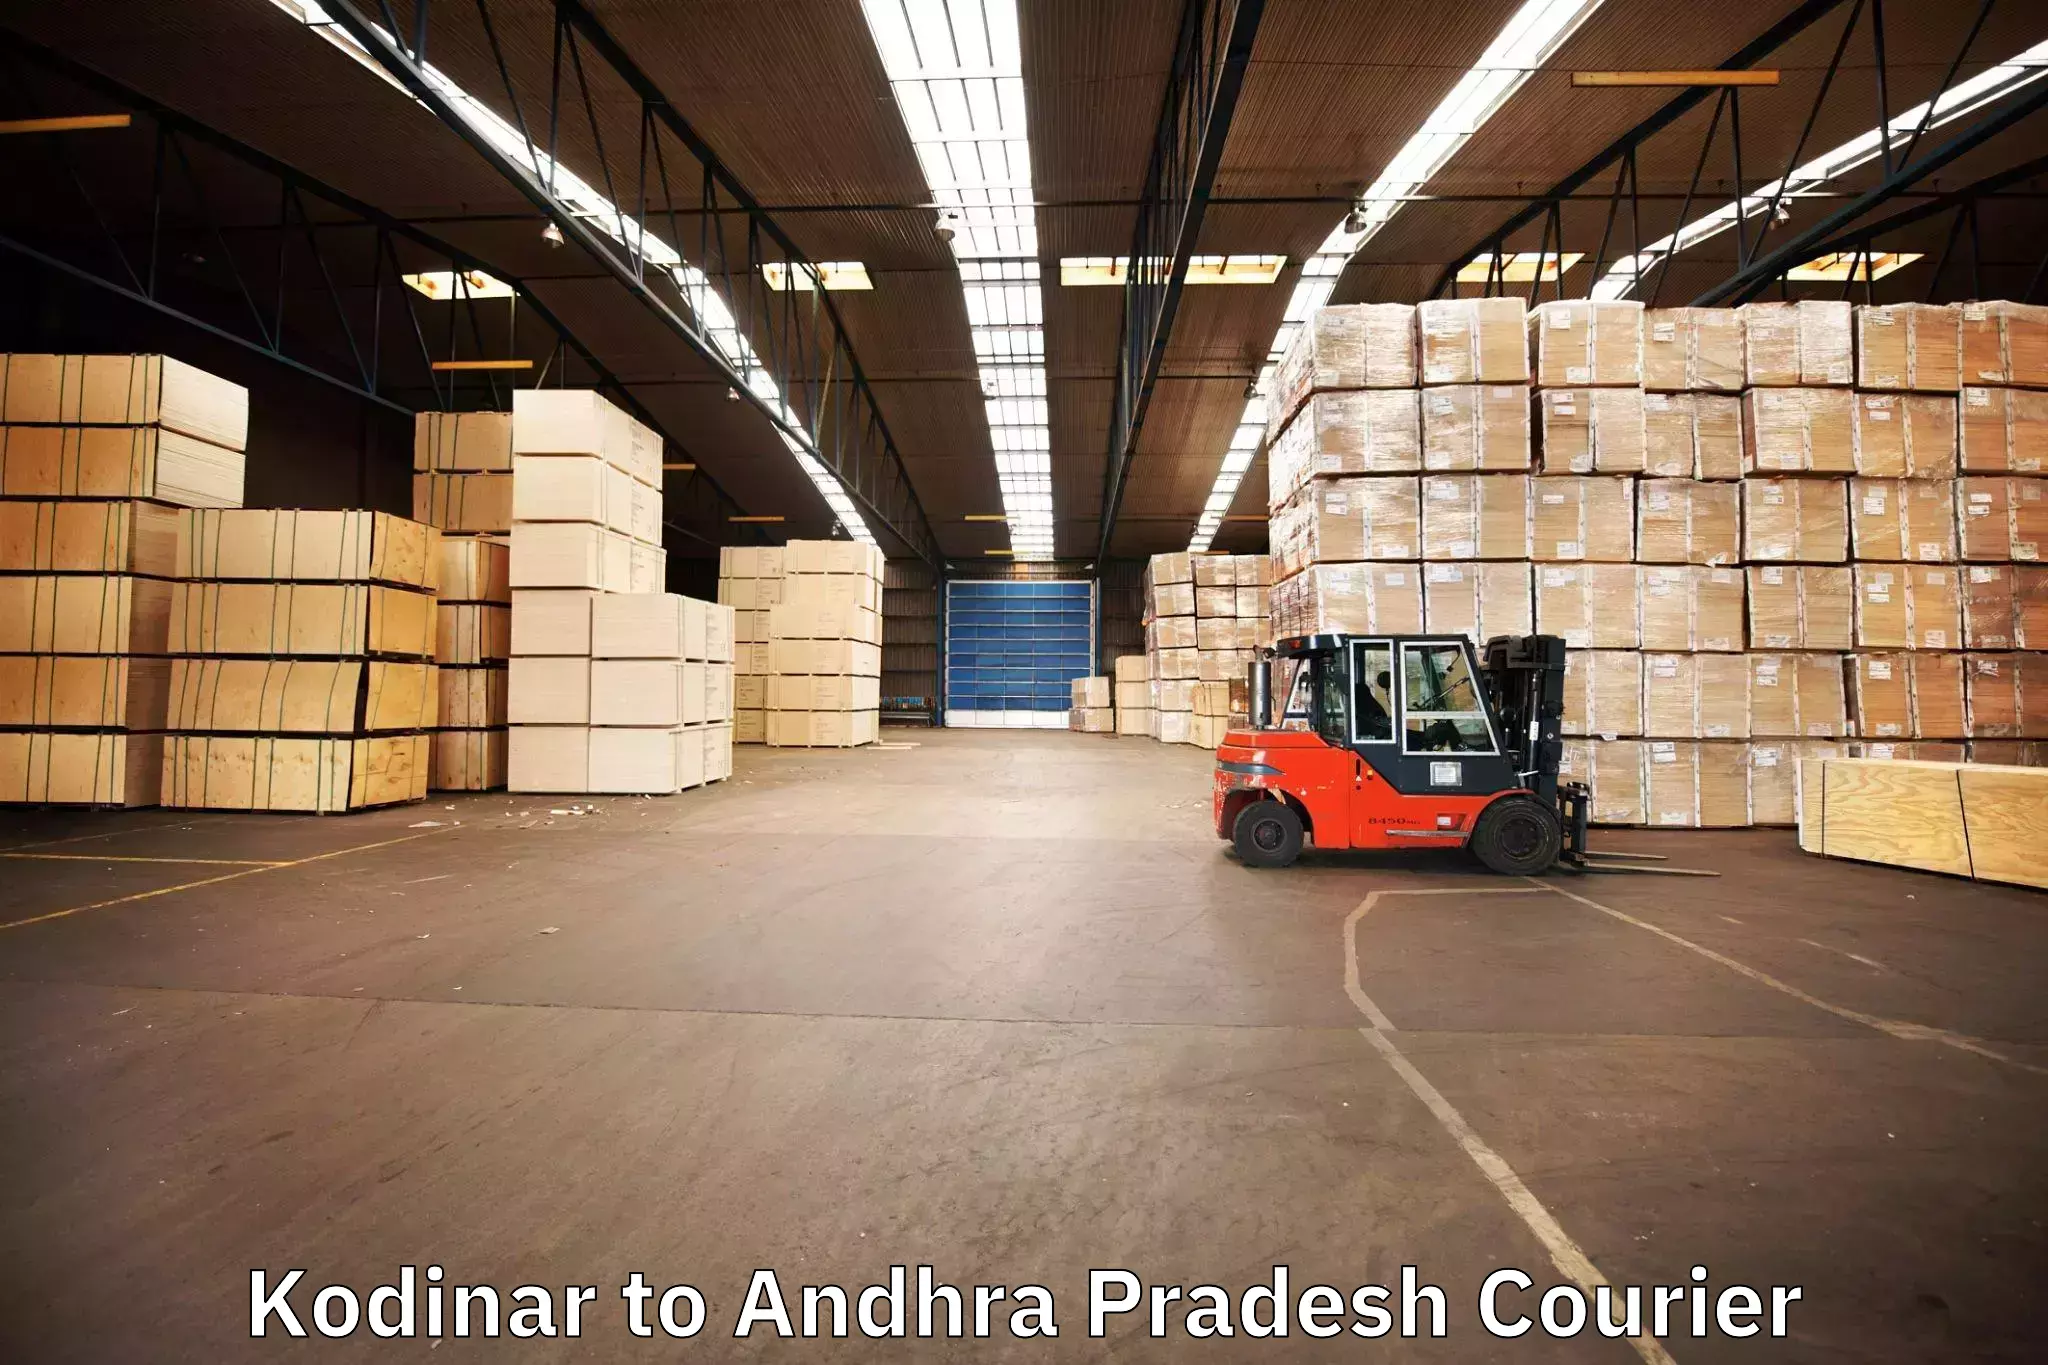 Moving and handling services in Kodinar to Garividi